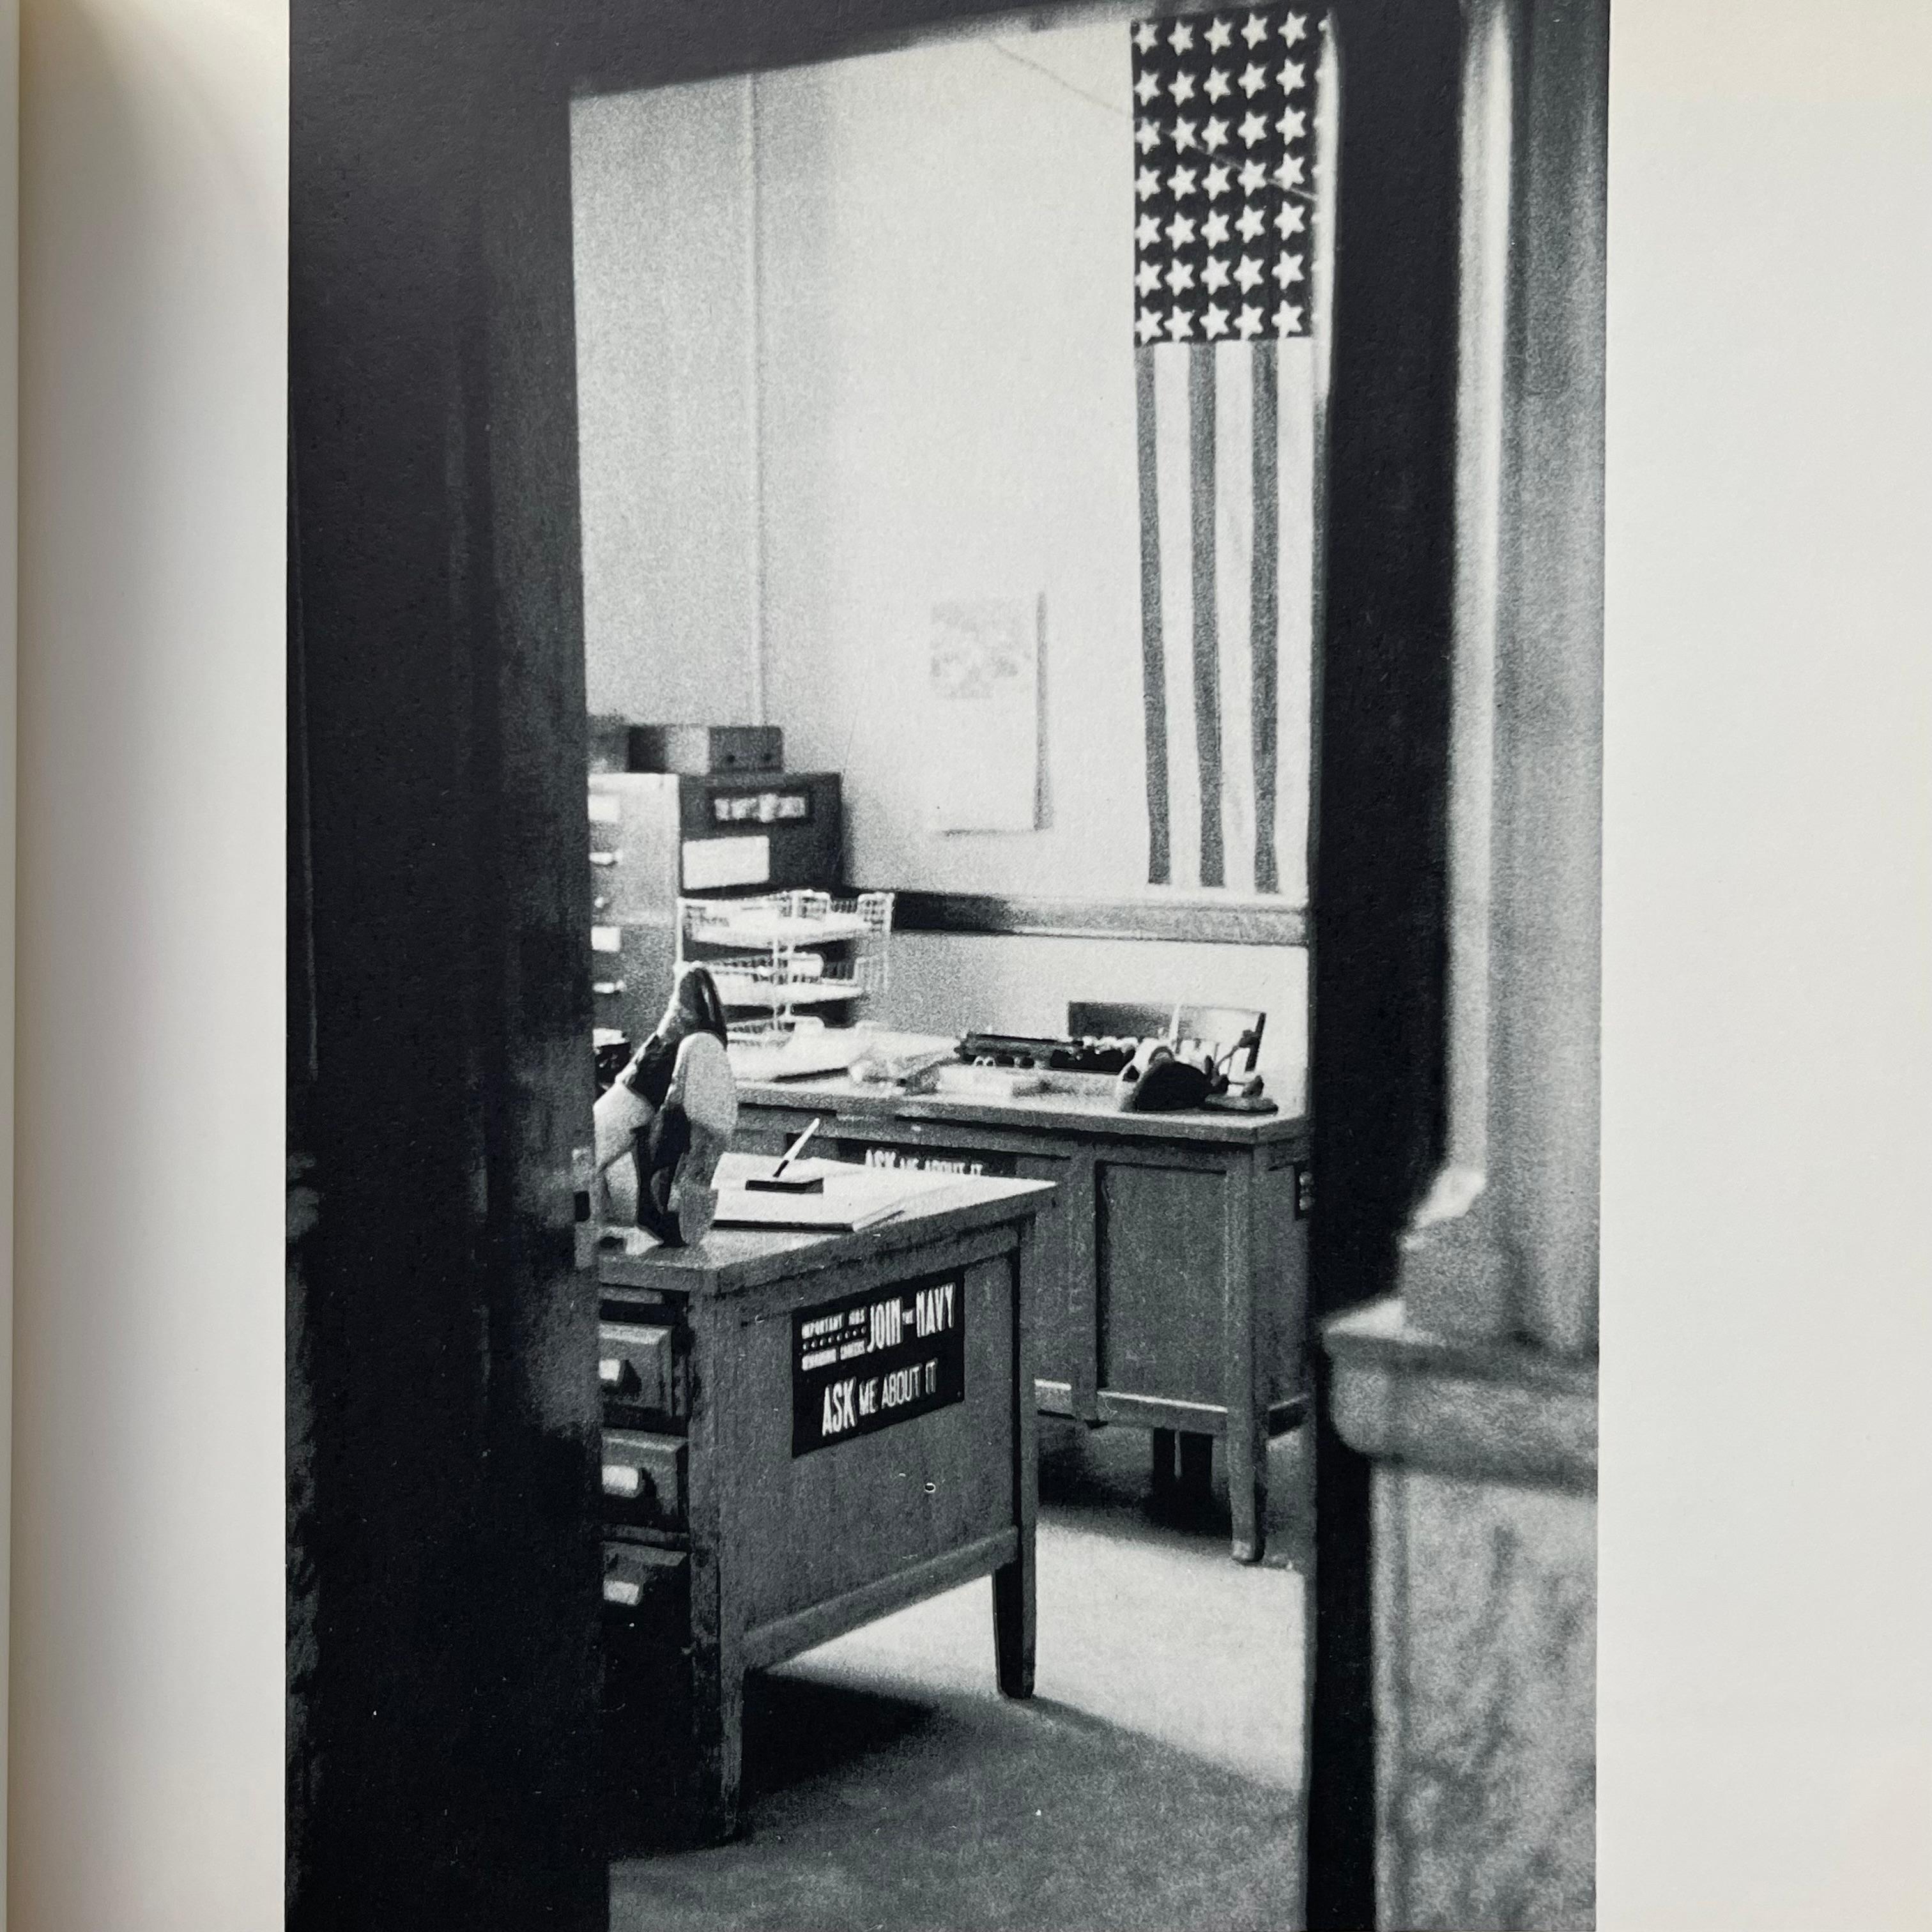 The Americans Robert Frank, Jack Kerouac 1st Enlarged Ed. 1969 1